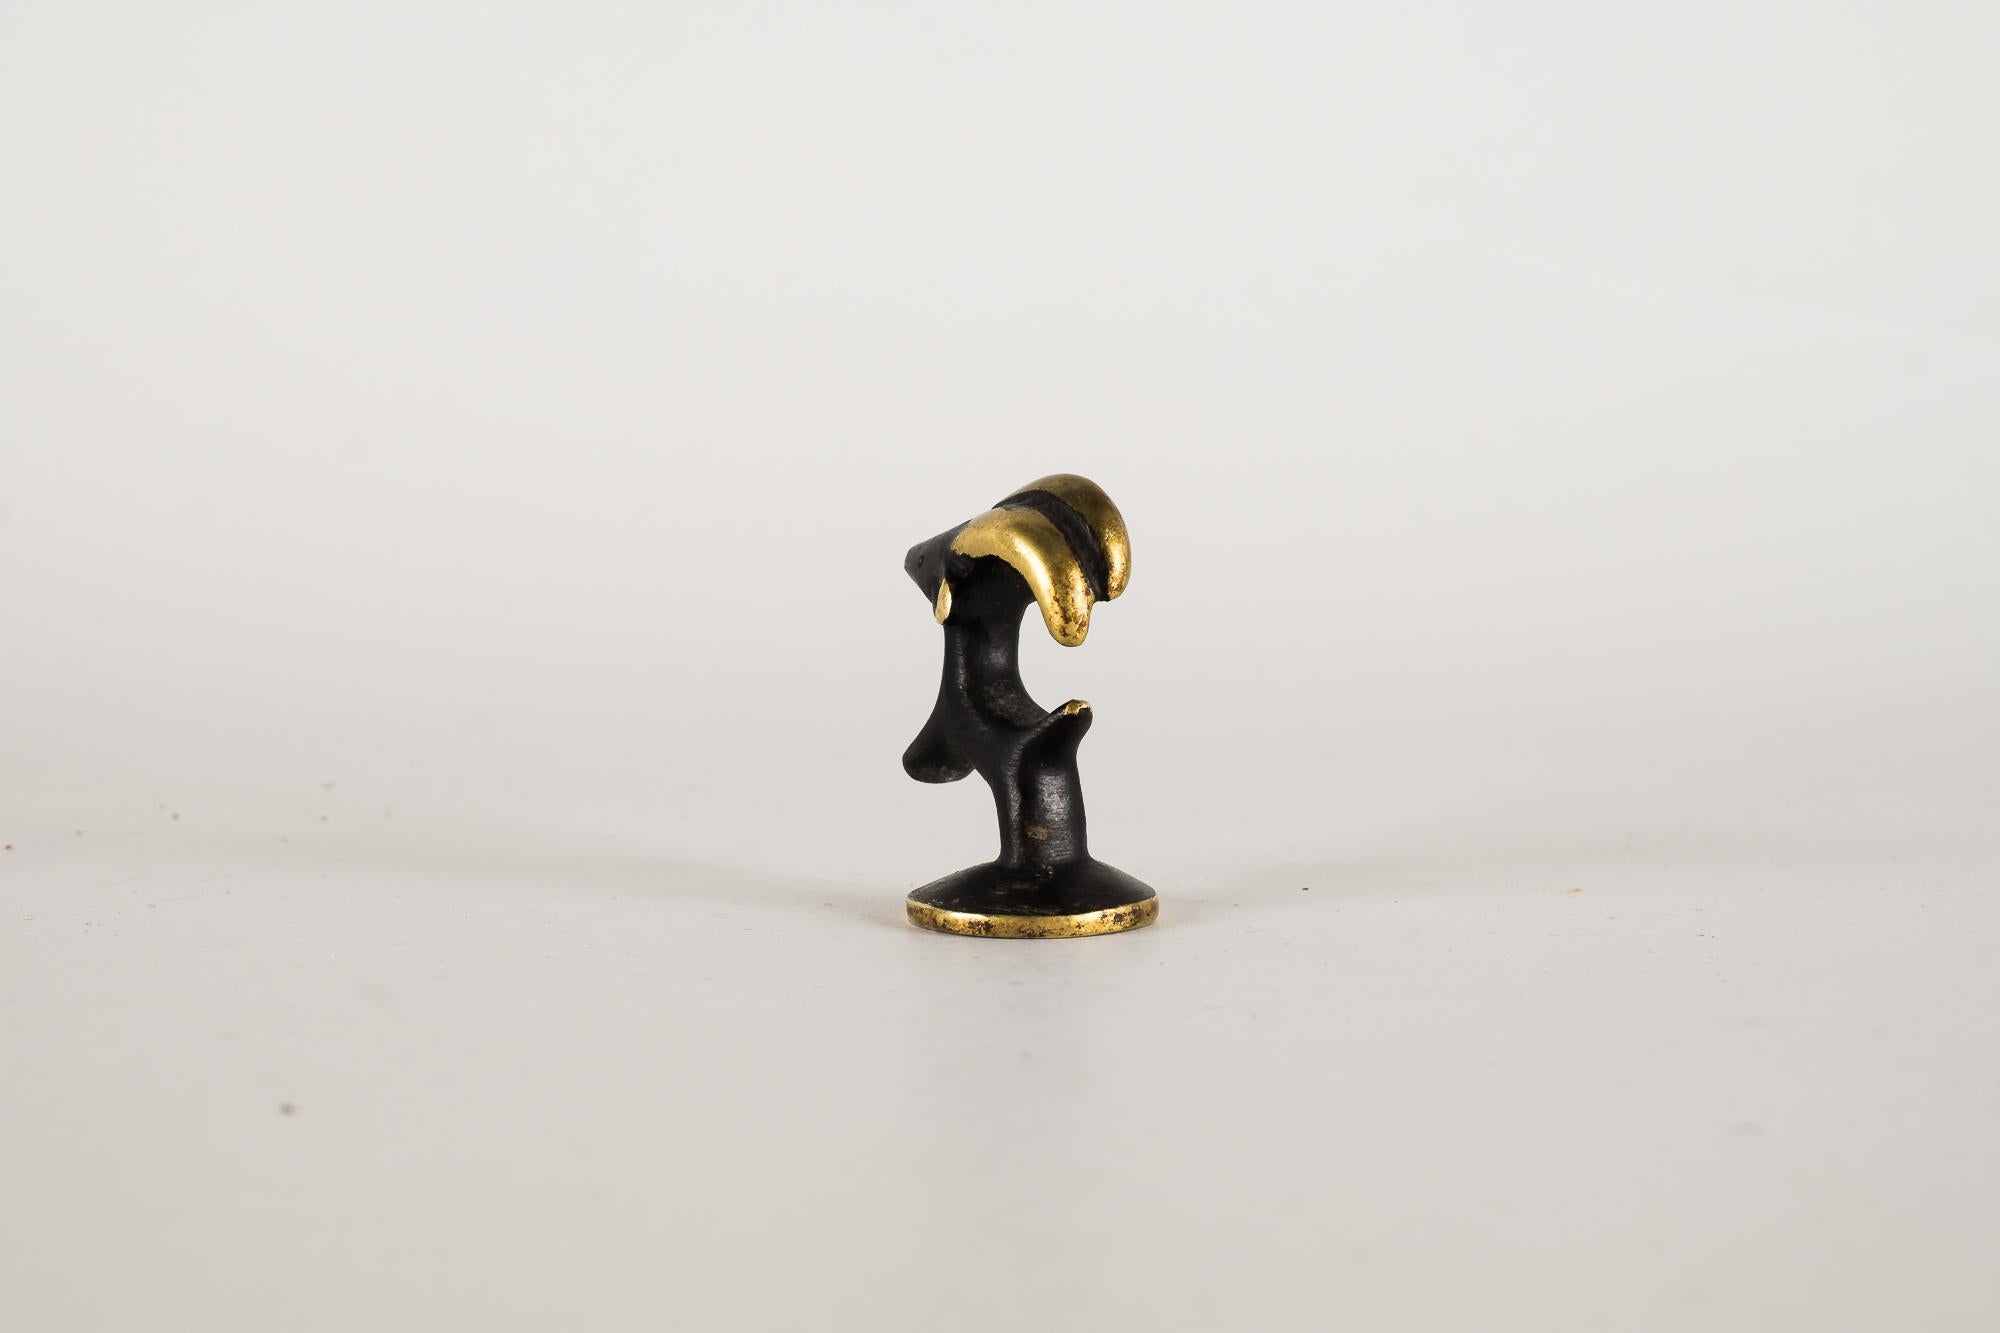 Austrian Small Capricorn Figurine by Walter Bosse, Vienna, Around 1950s